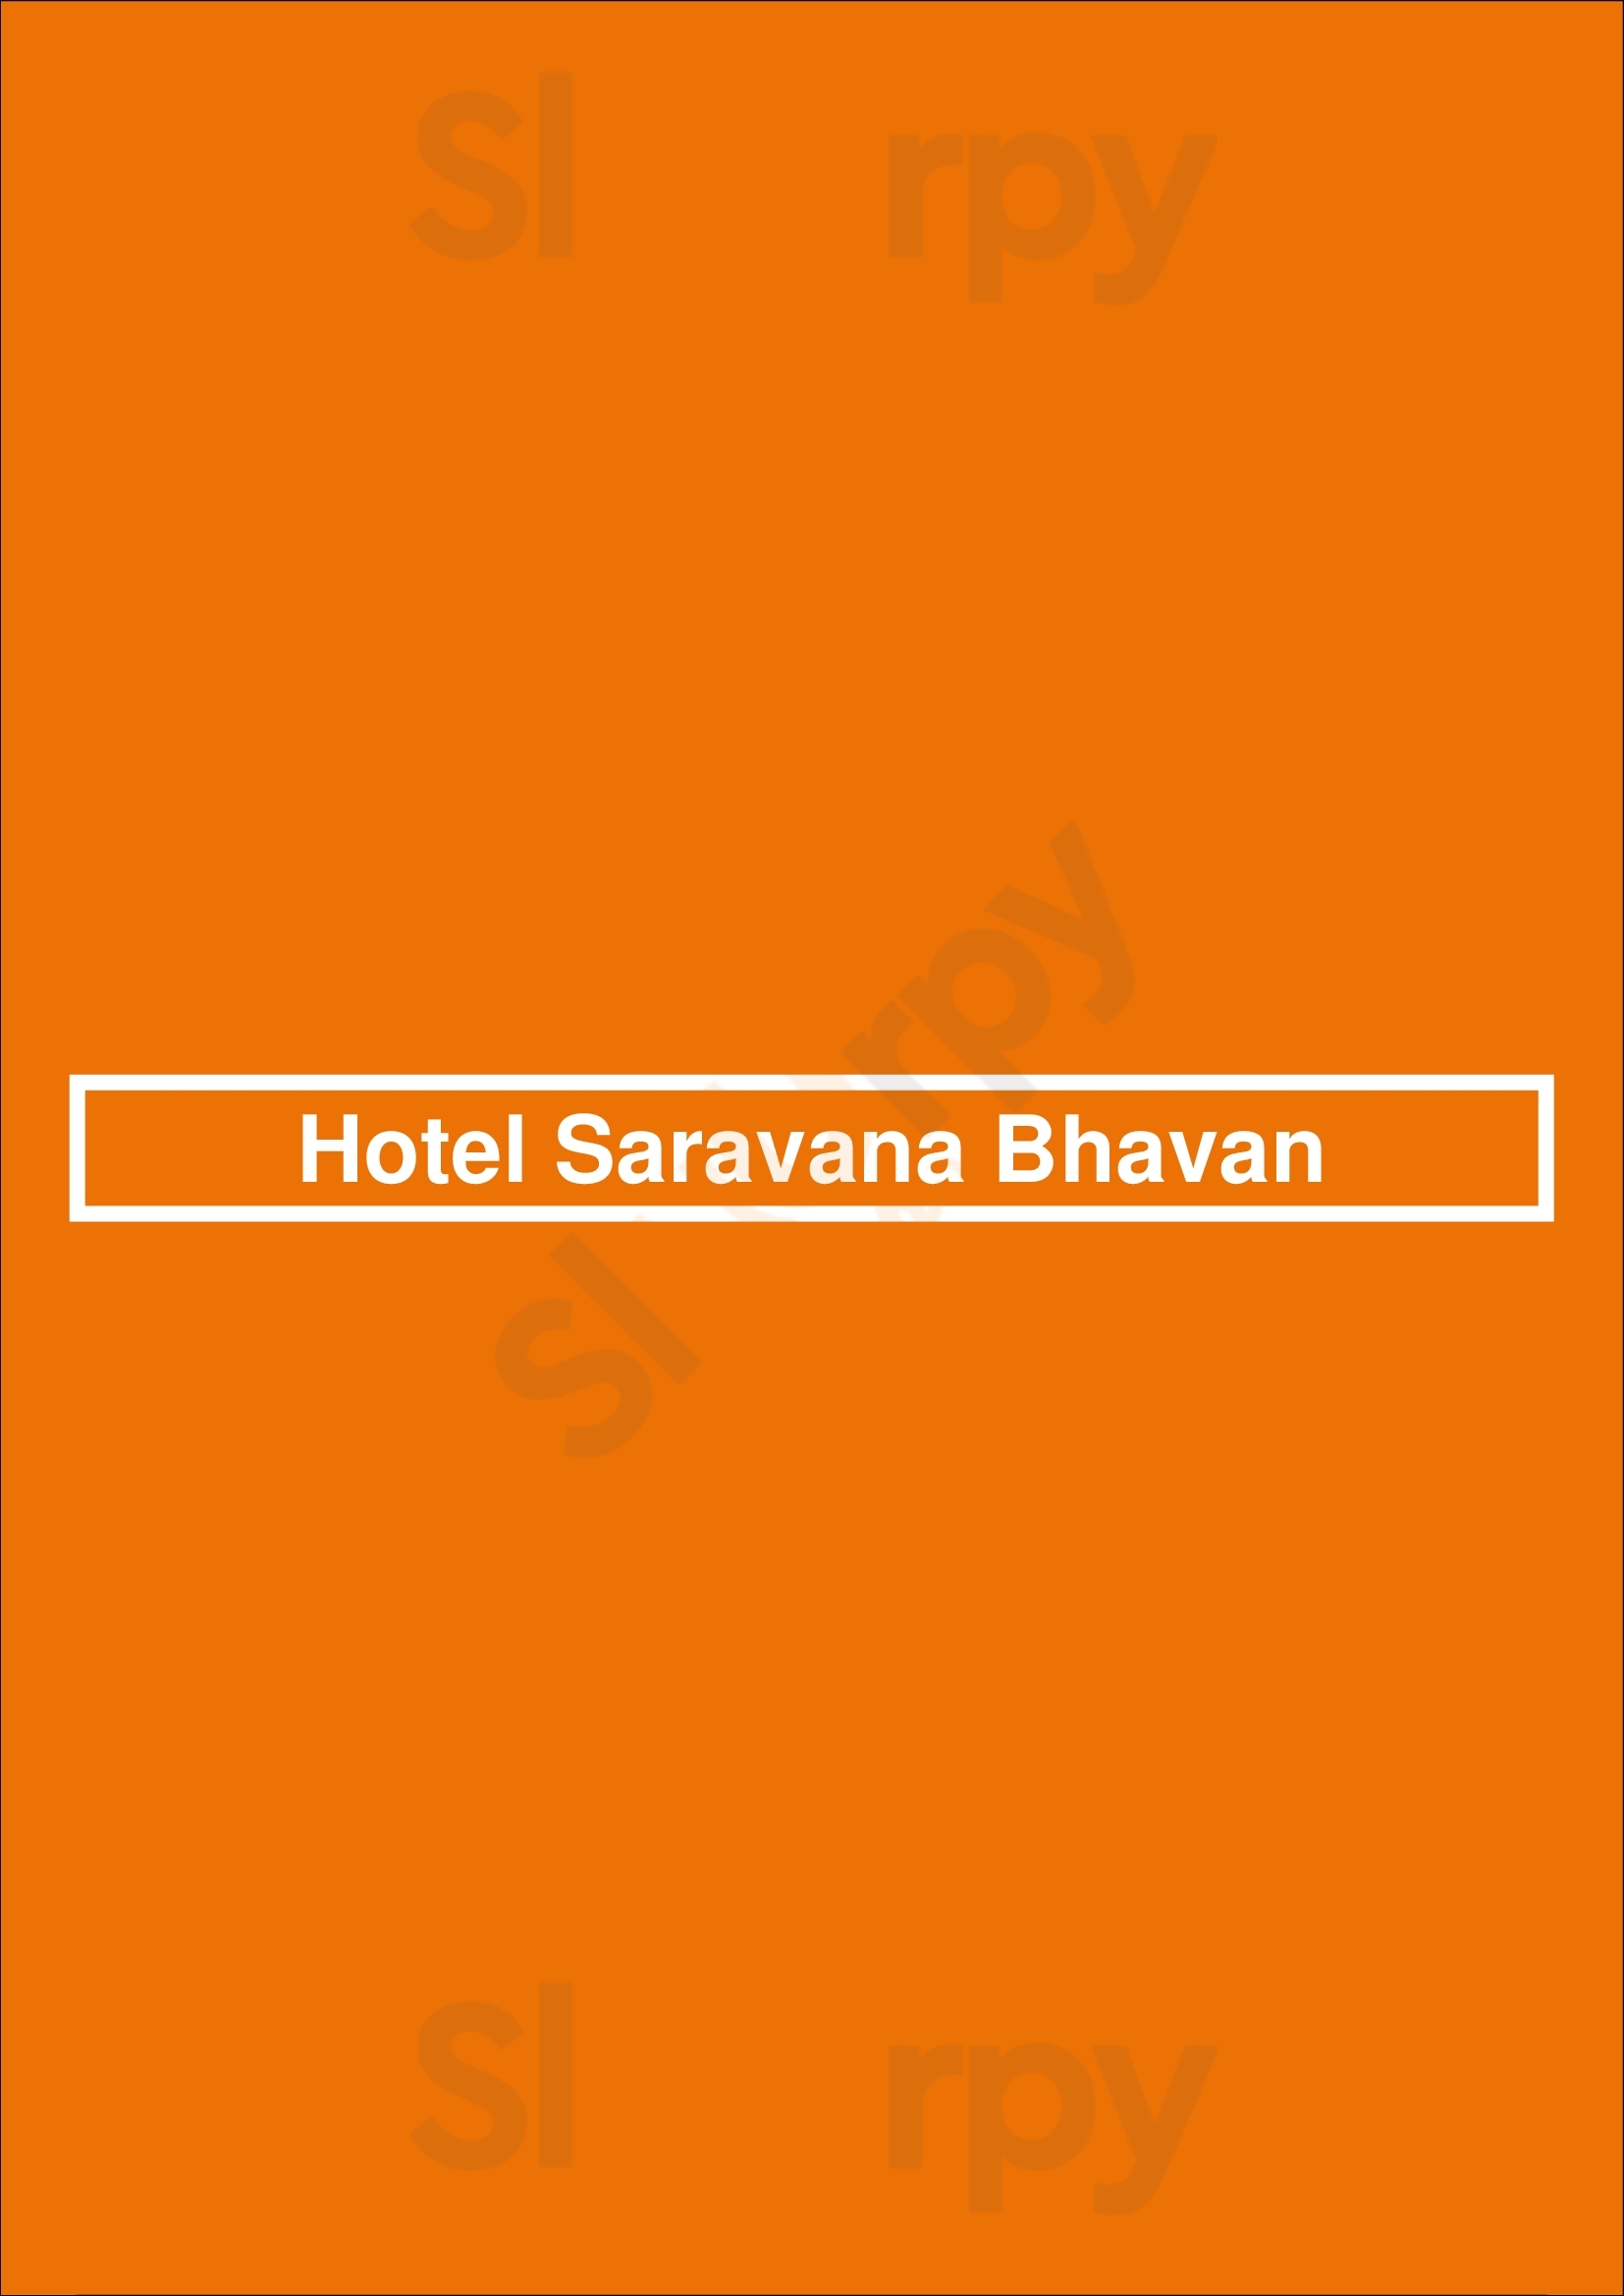 Hotel Saravana Bhavan Croydon Menu - 1